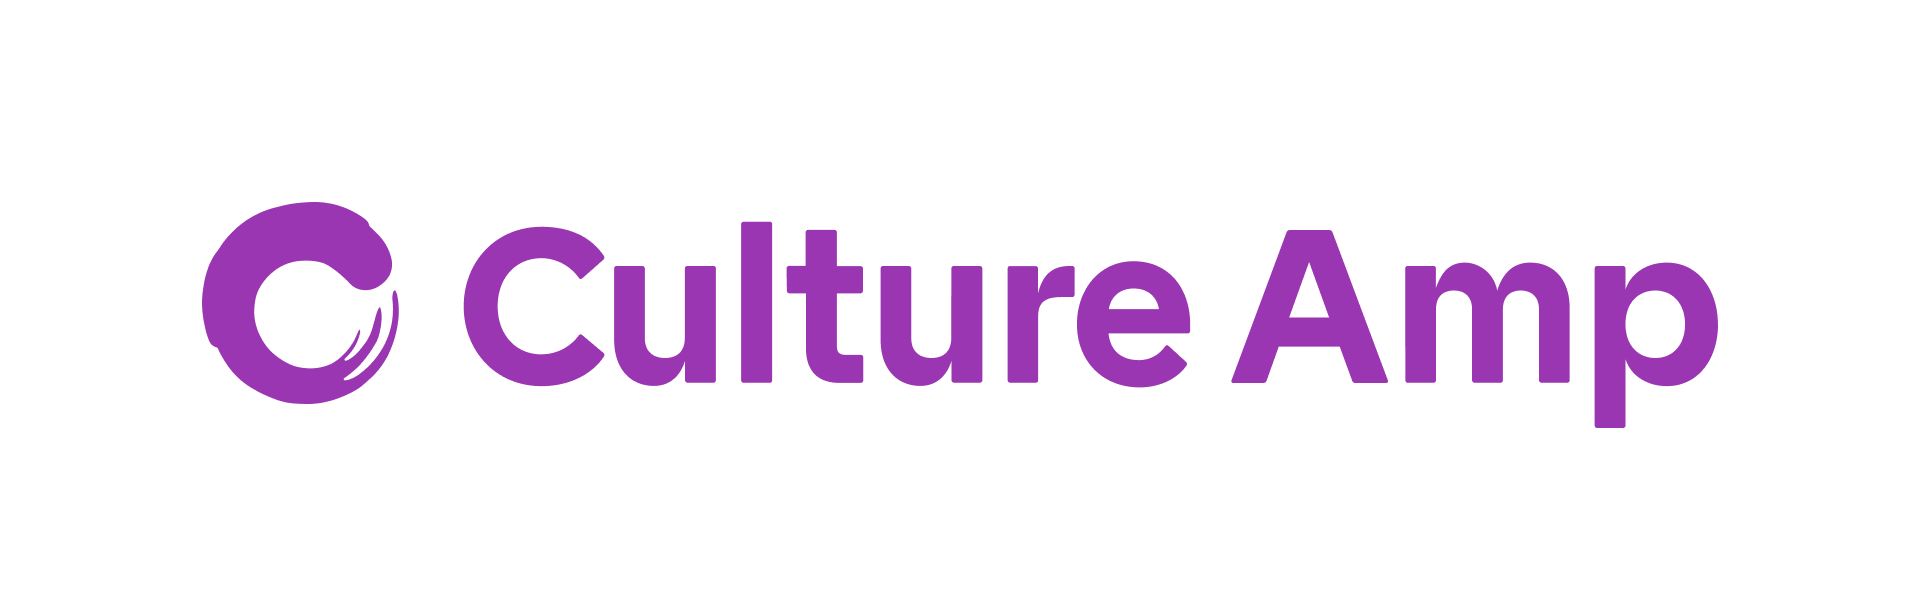 Culture Amp - culture-amp-logo-full-purple.png